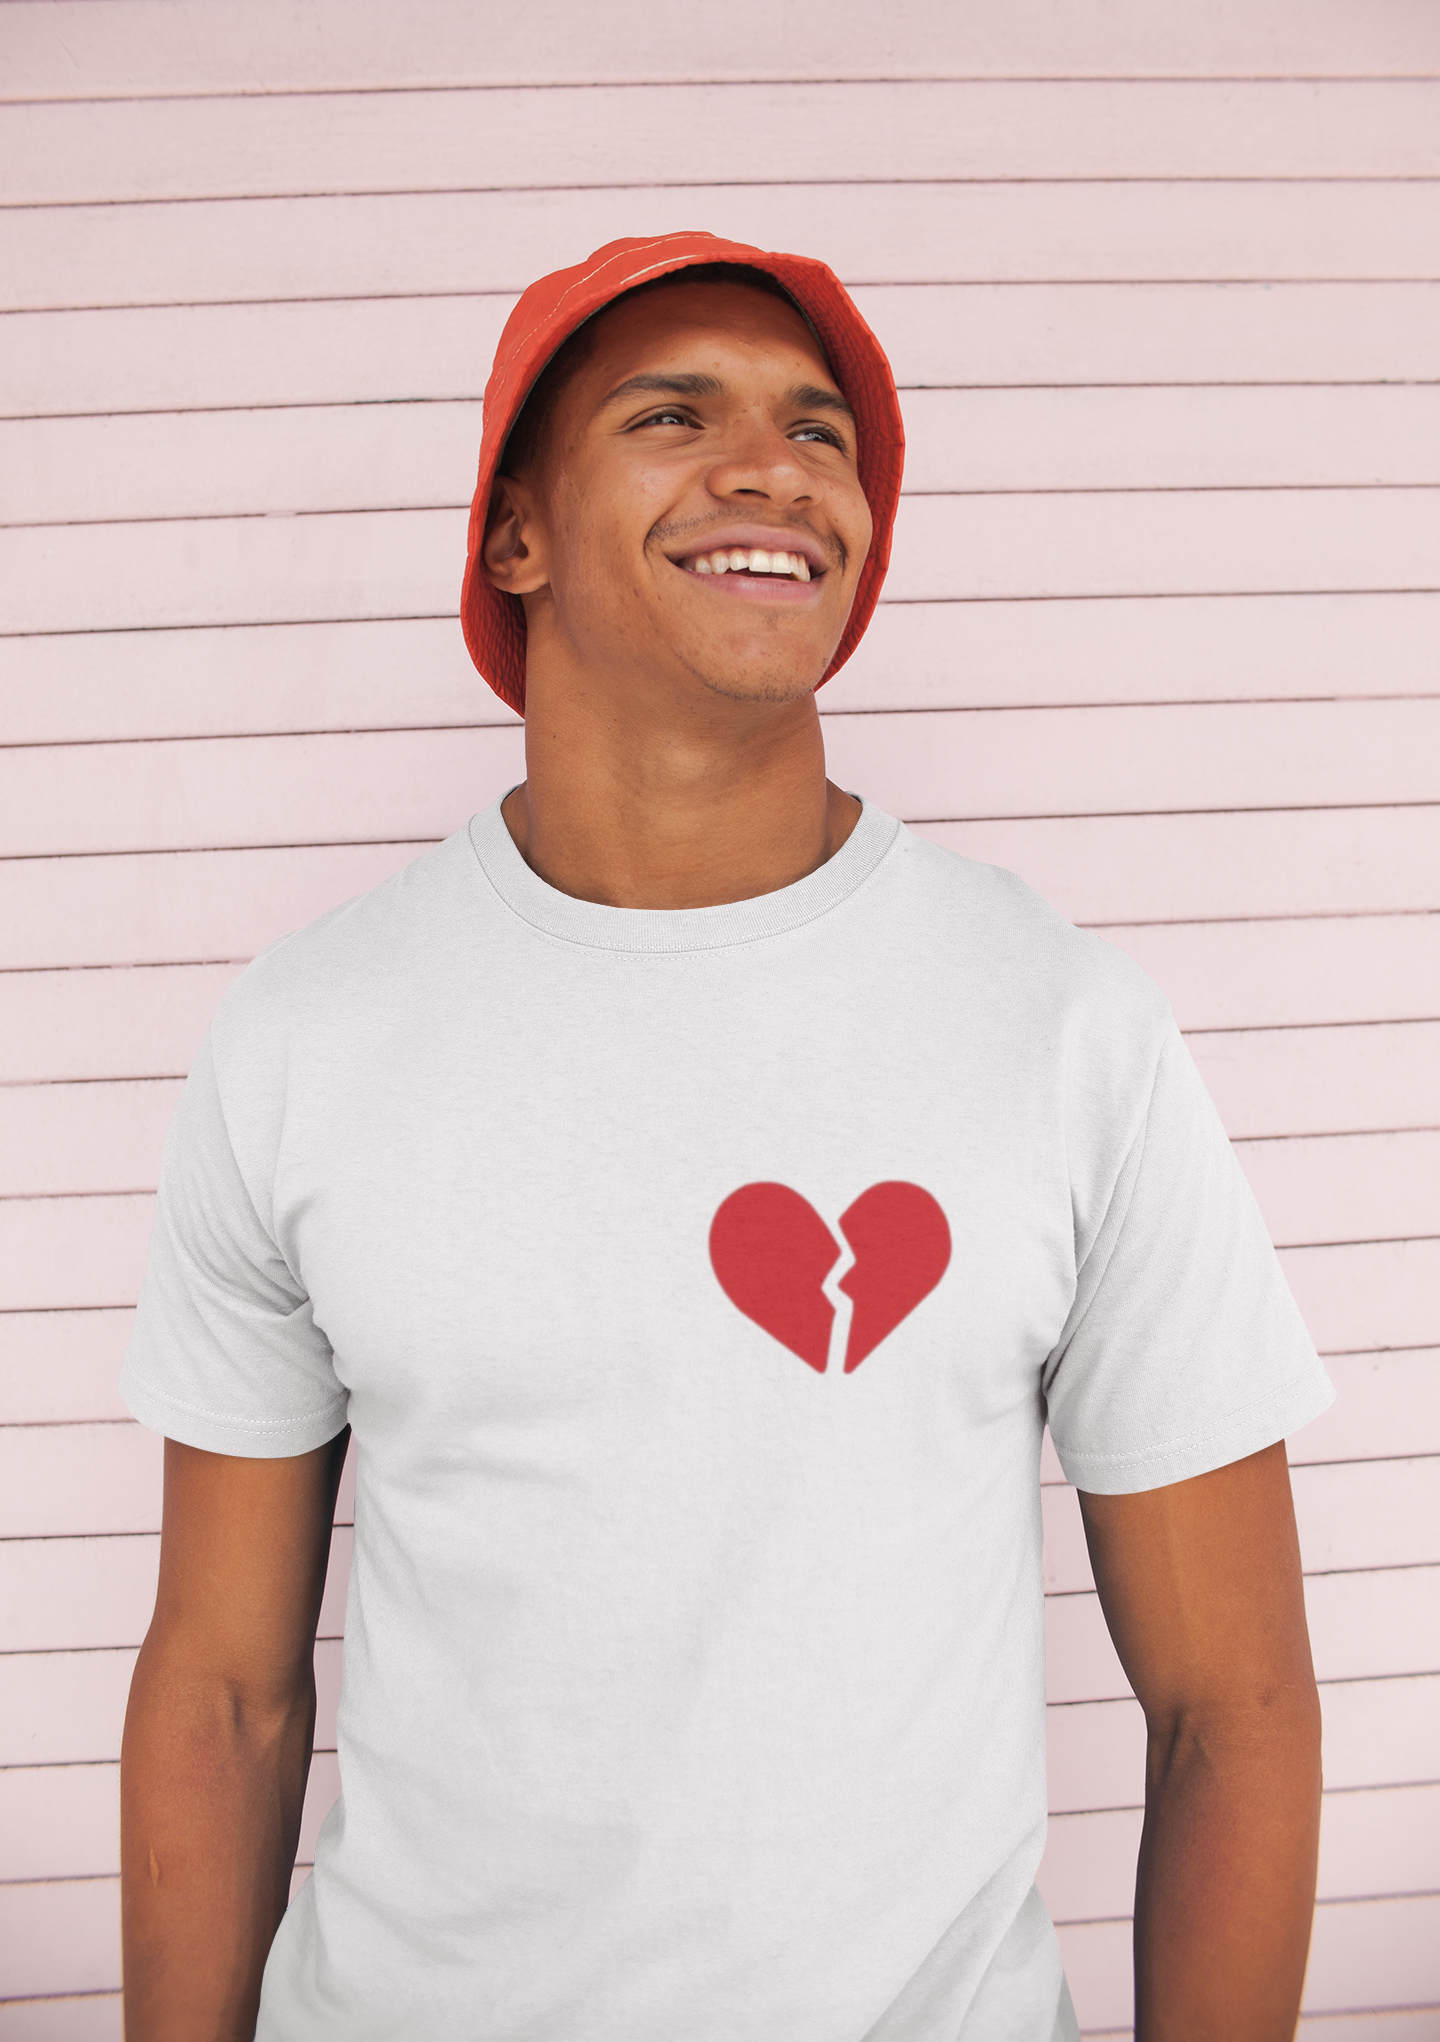 The "Love" T shirt